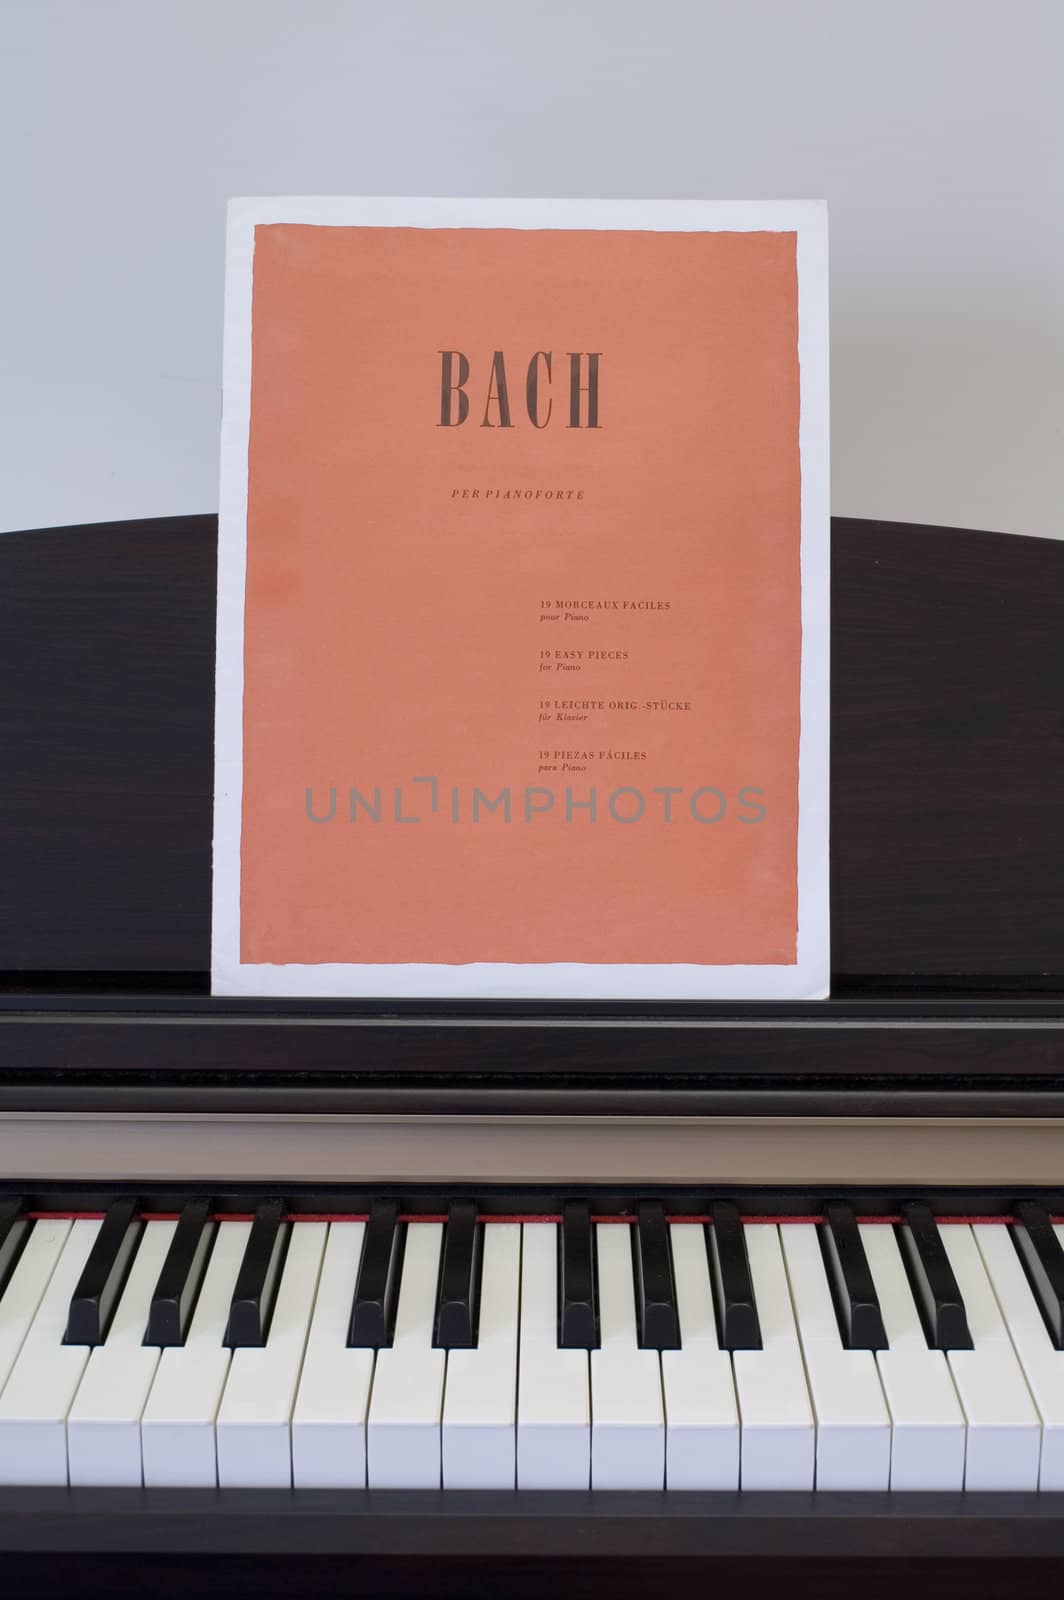 Piano keyboard with Bach score